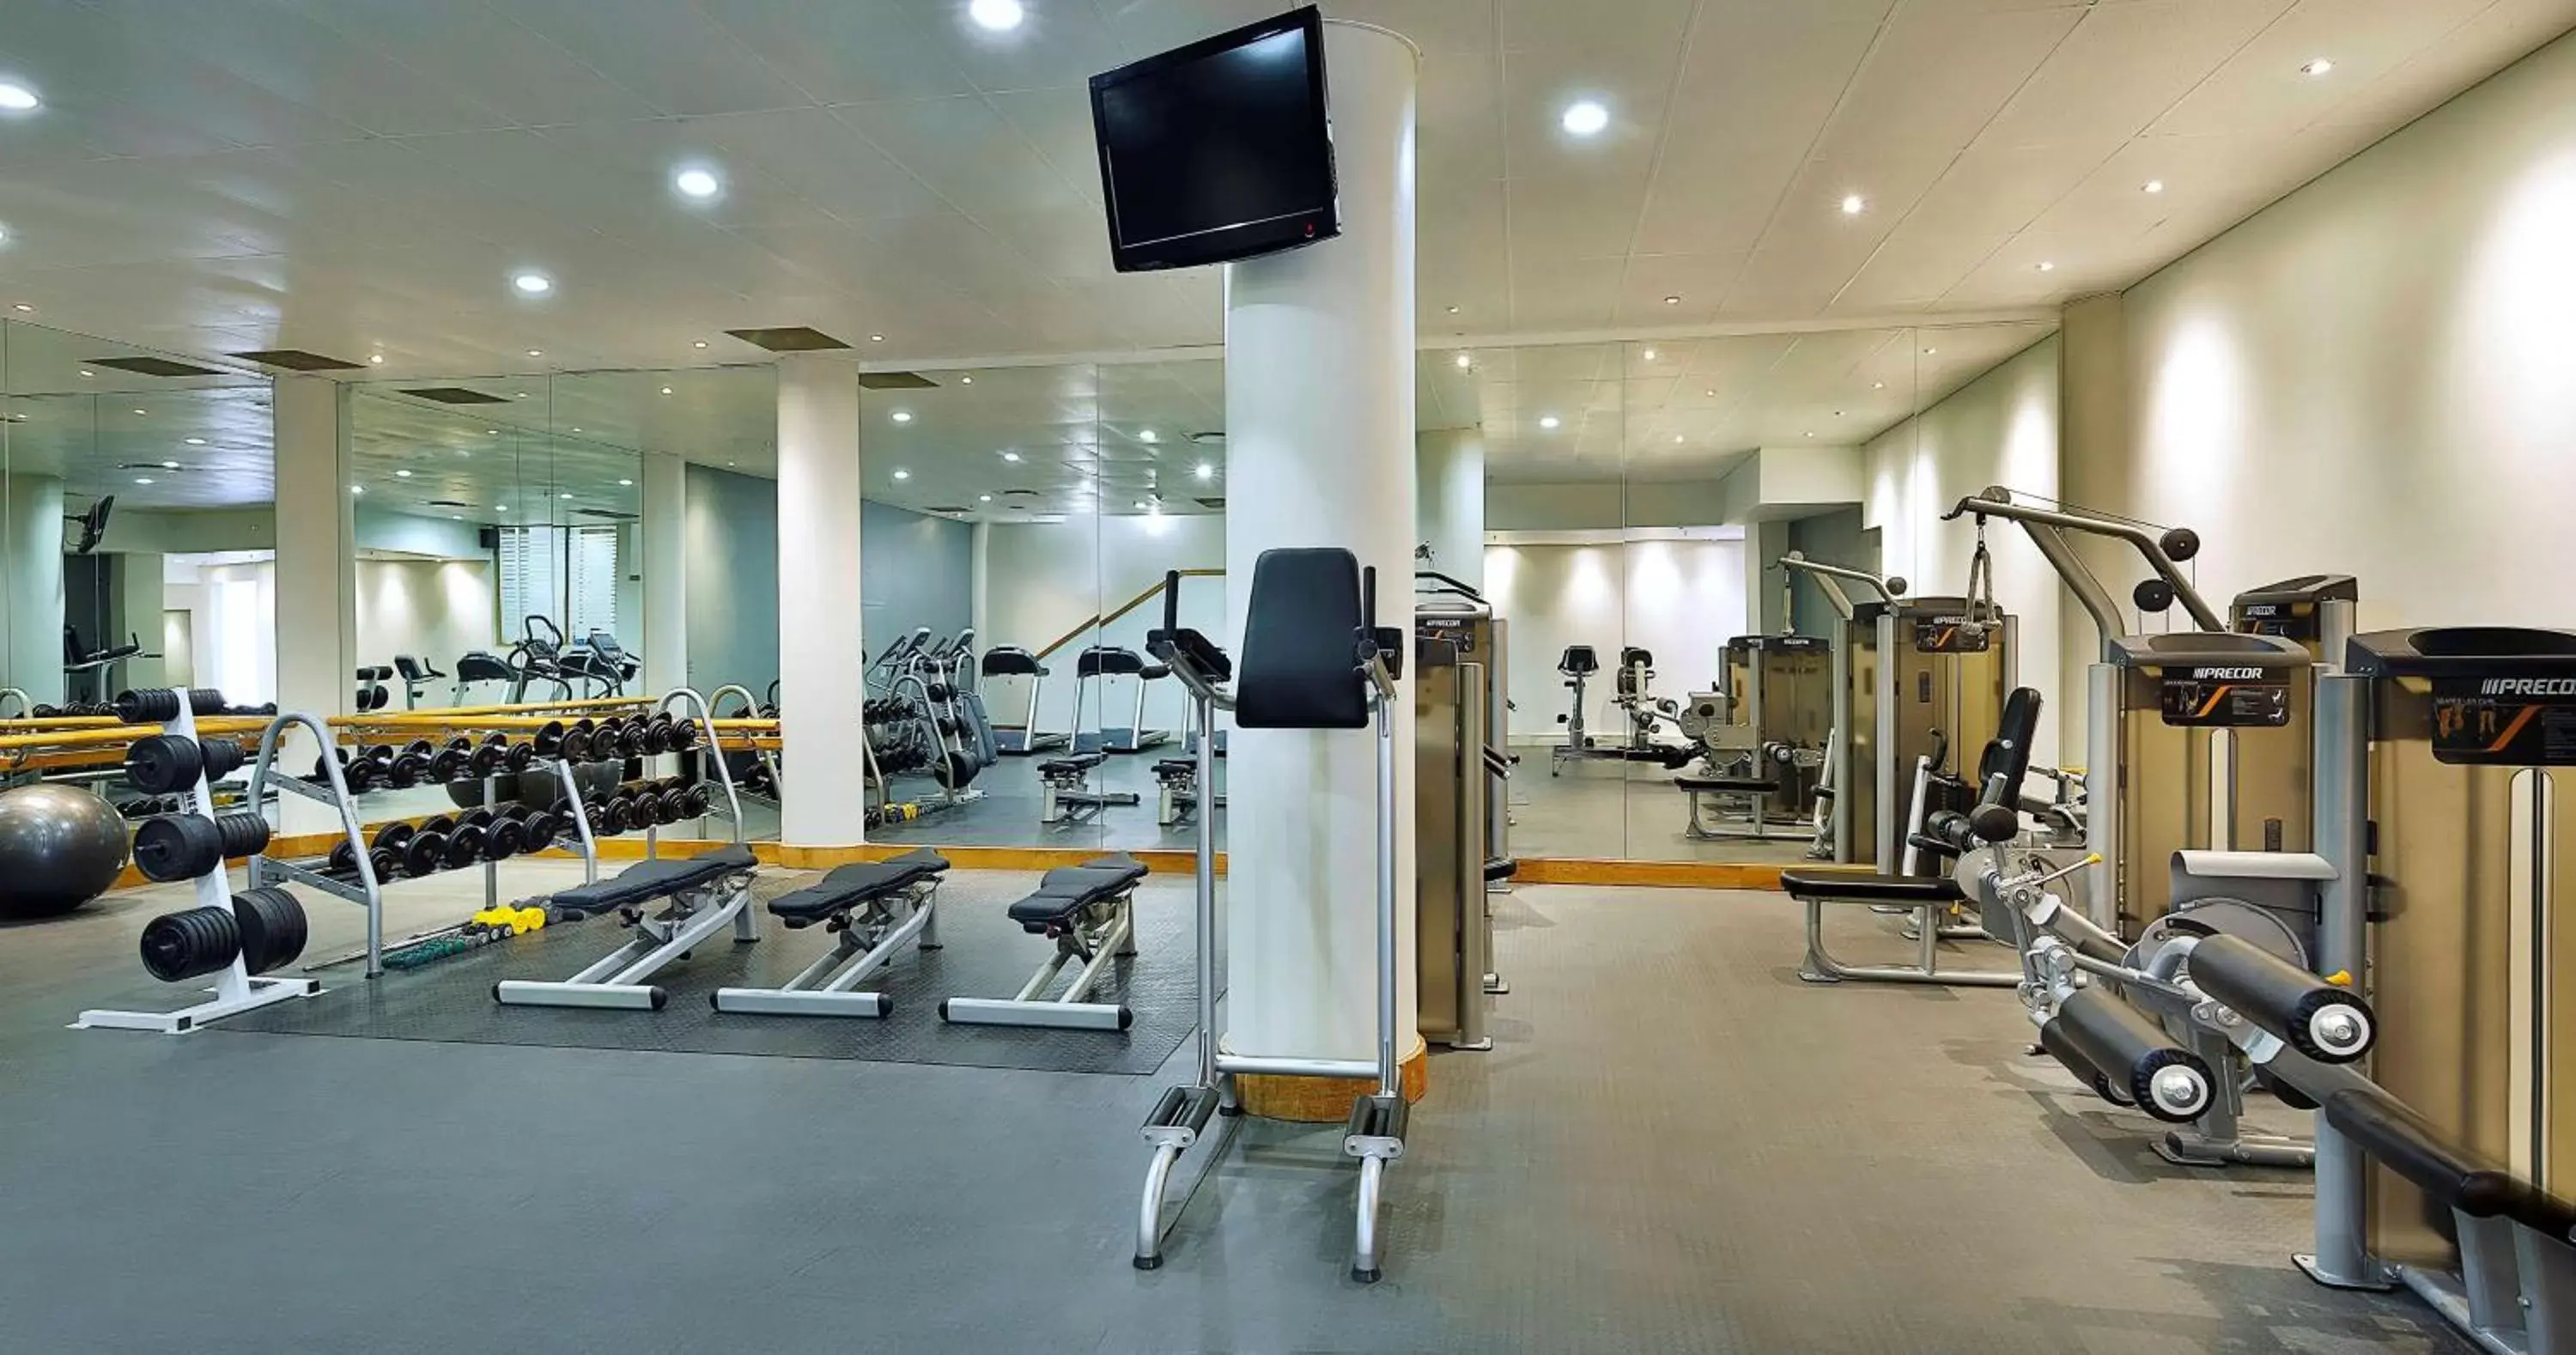 Fitness centre/facilities, Fitness Center/Facilities in Hilton Sandton